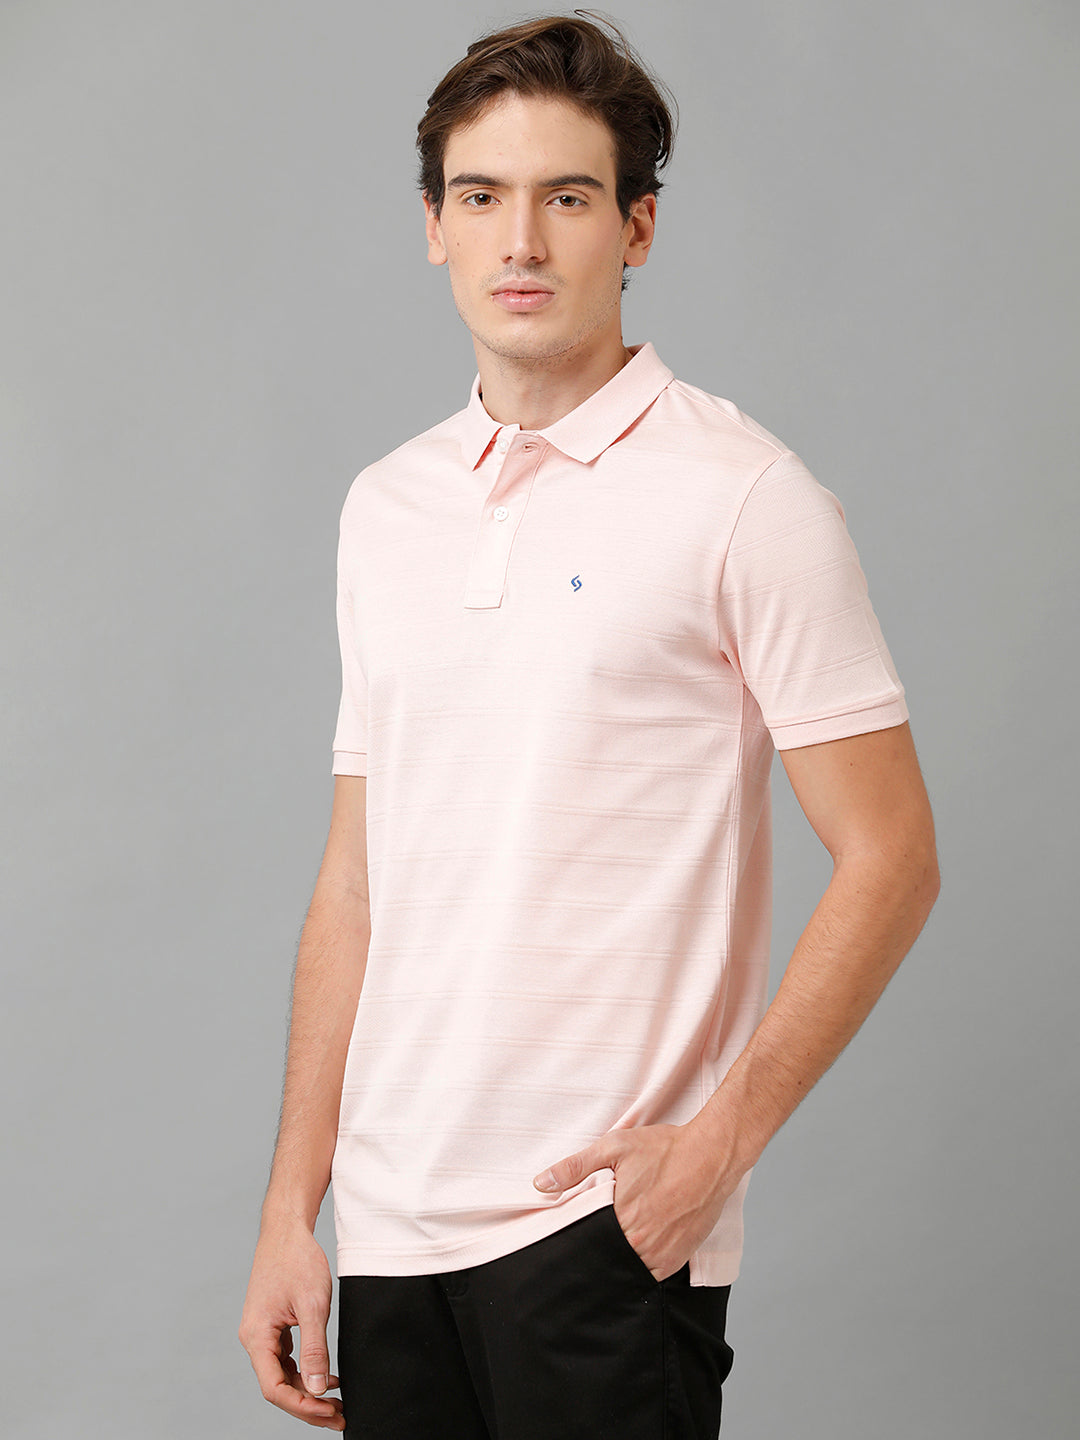 Classic Polo Men's Cotton Striped Half Sleeve Slim Fit Polo Neck Cream Color T-Shirt | Prm - 753 C